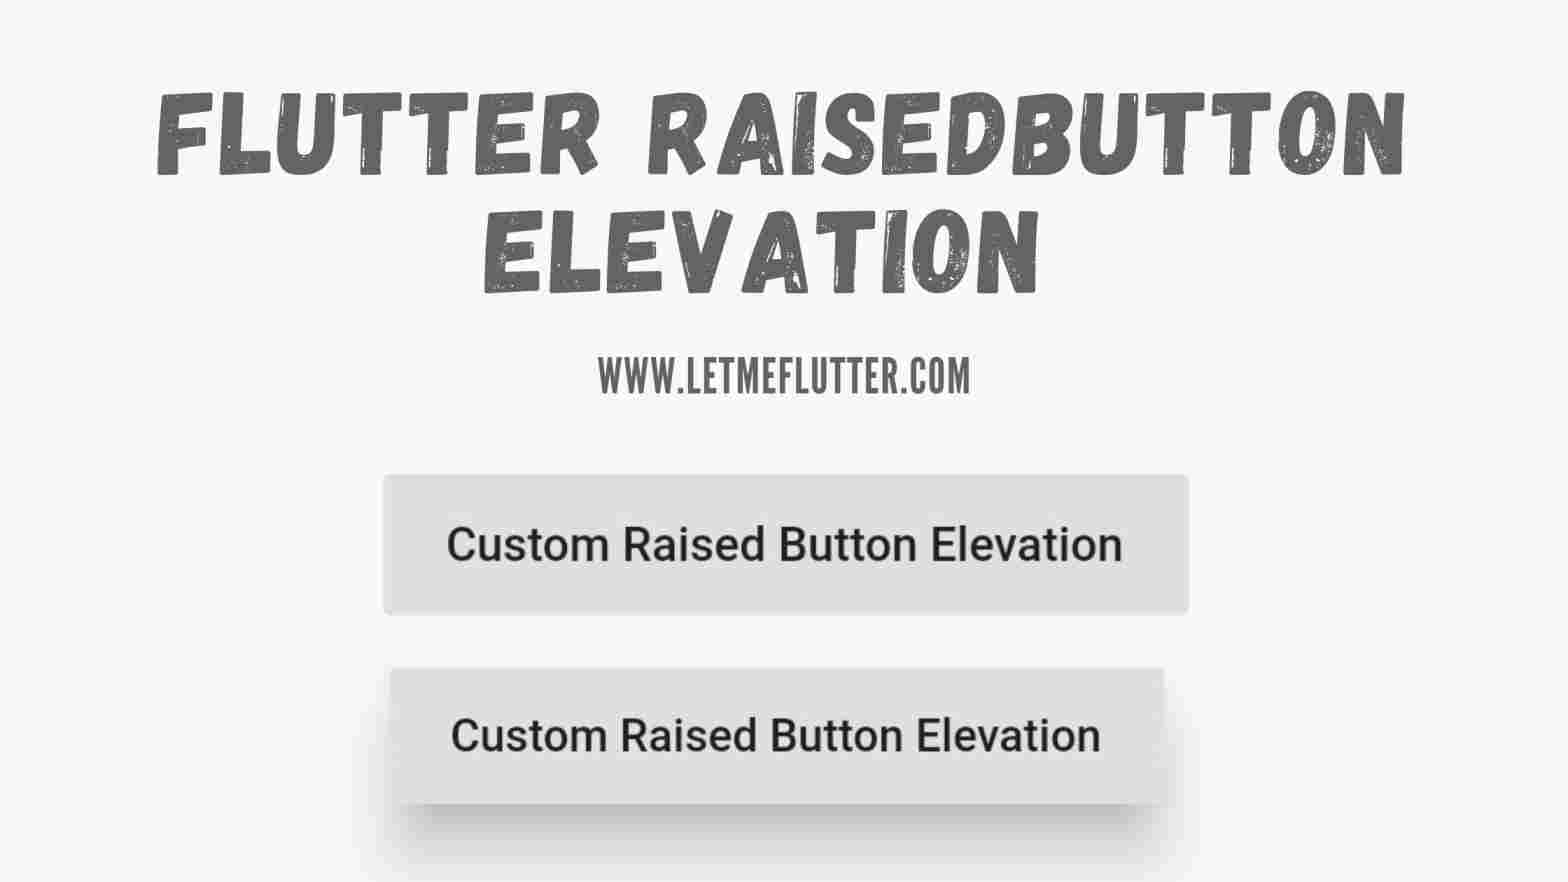 Flutter raised button elevation